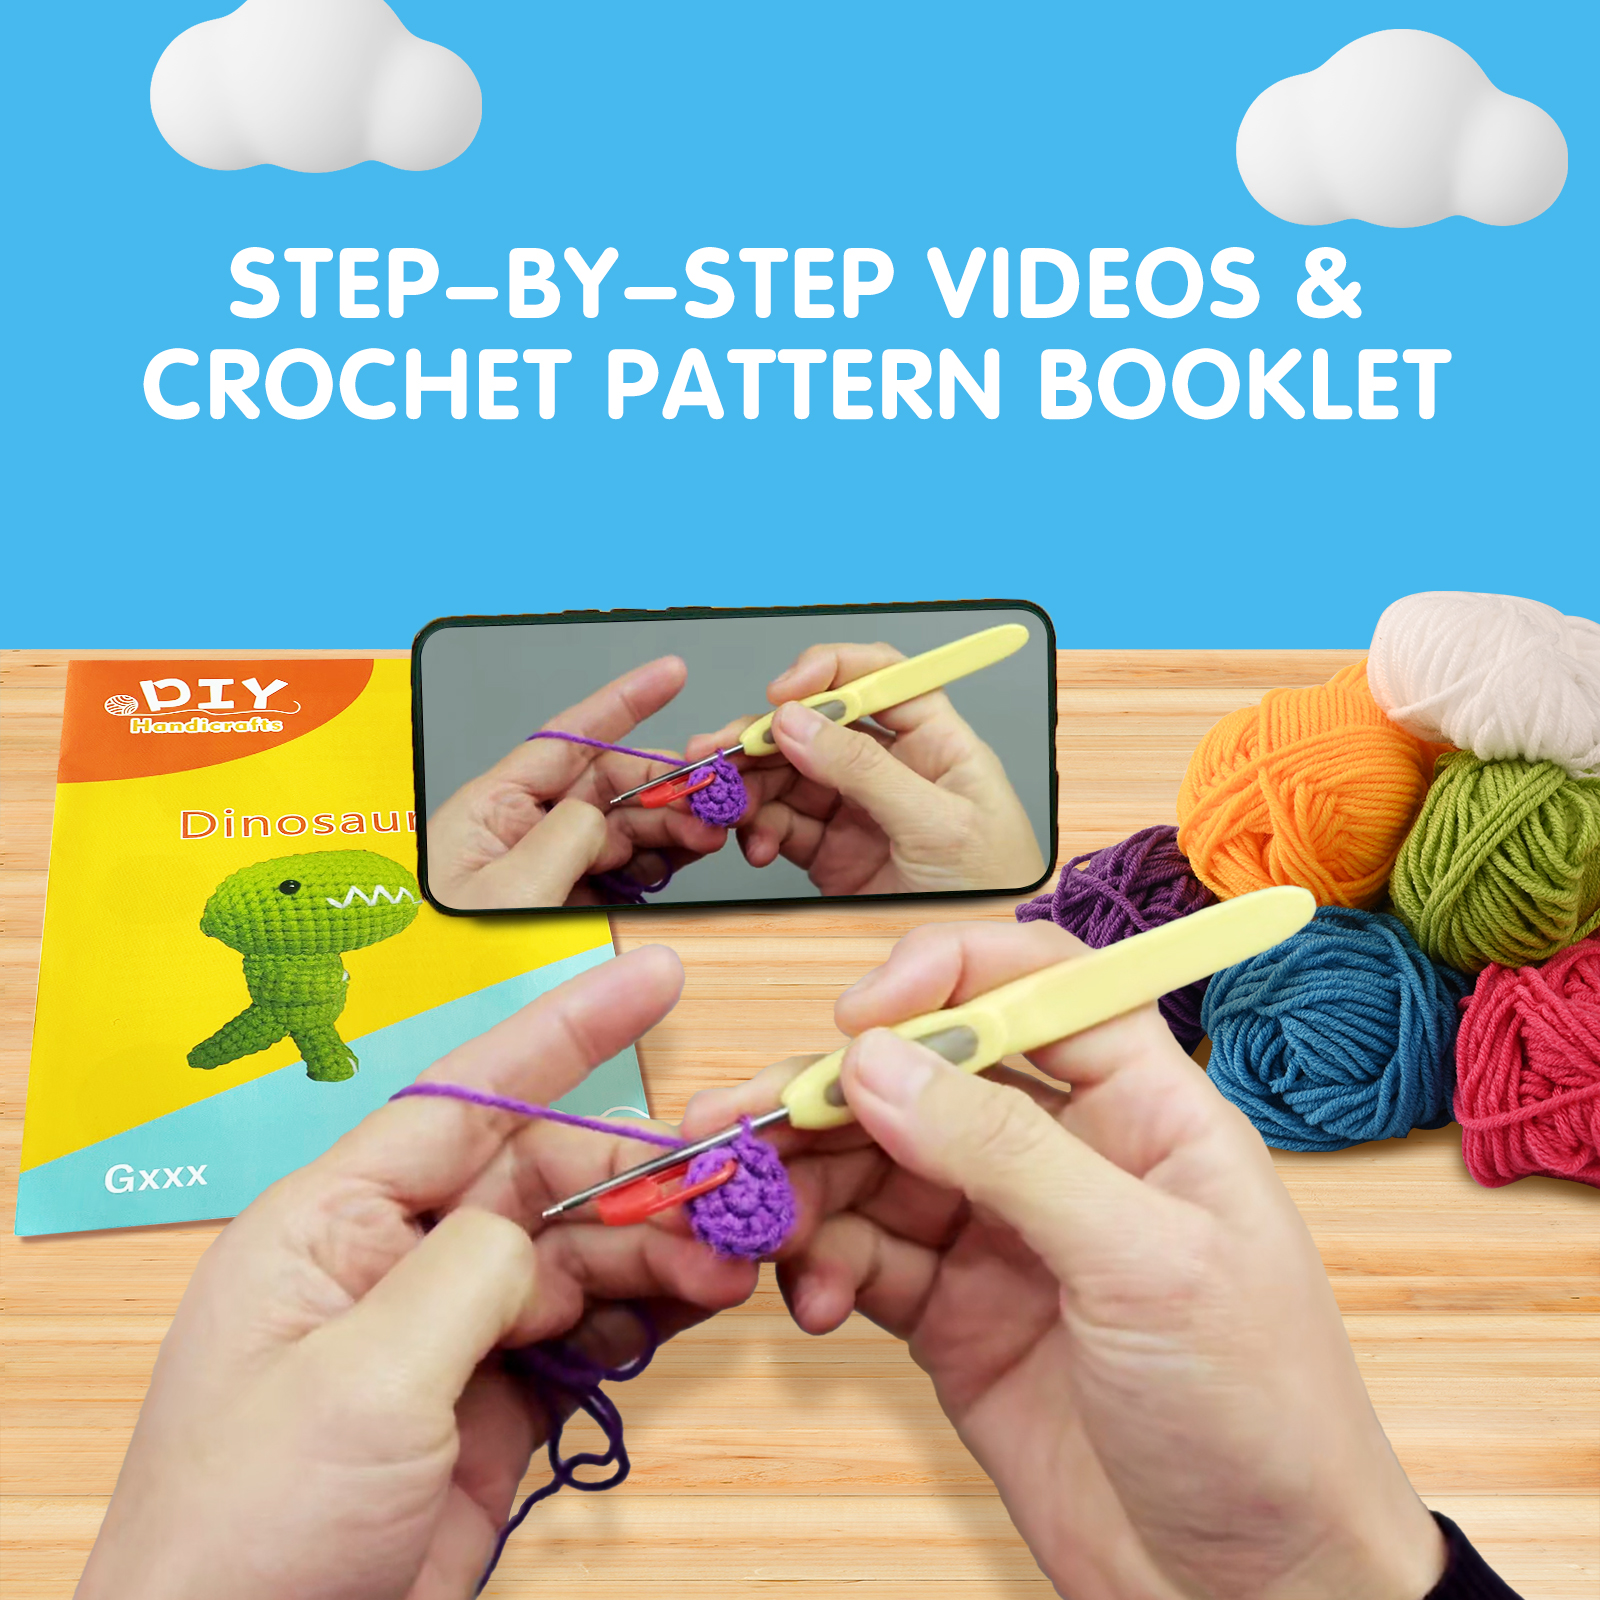 Crochet Kit For Beginners Blue Dinosaur With Easy Peasy Yarn